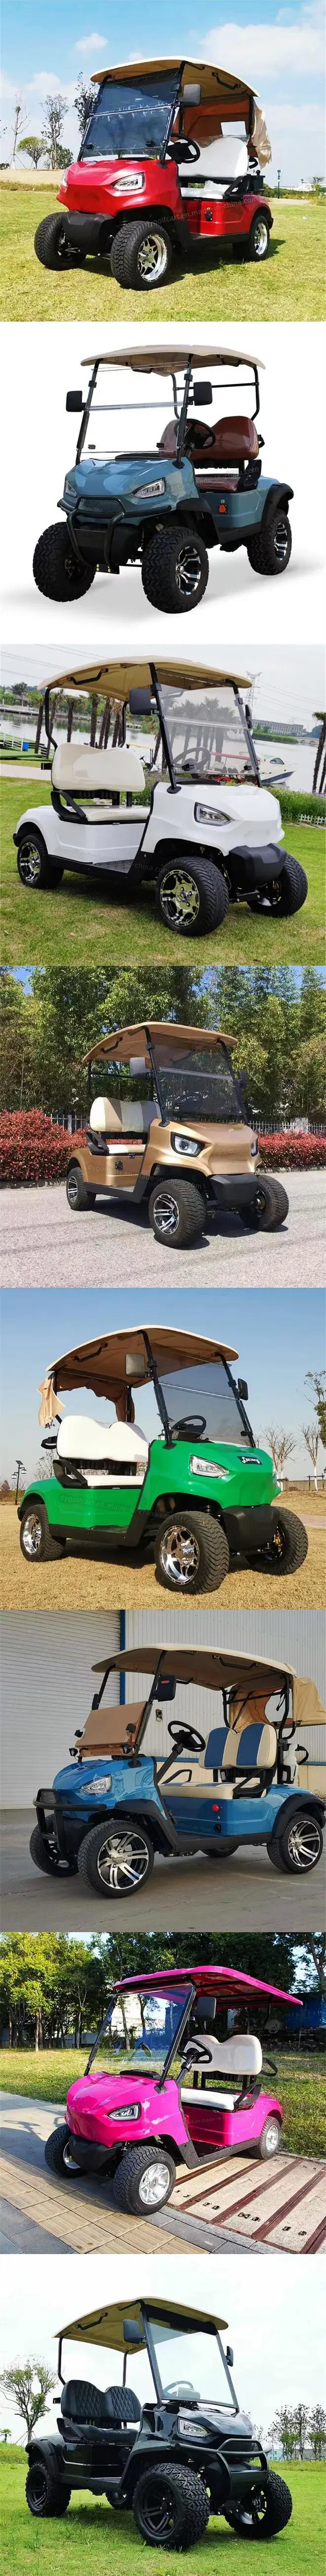 Camp Golf Cart 4 Person Electric Golf Cart Wholesale Golf Carts Orlando Florida for Sale